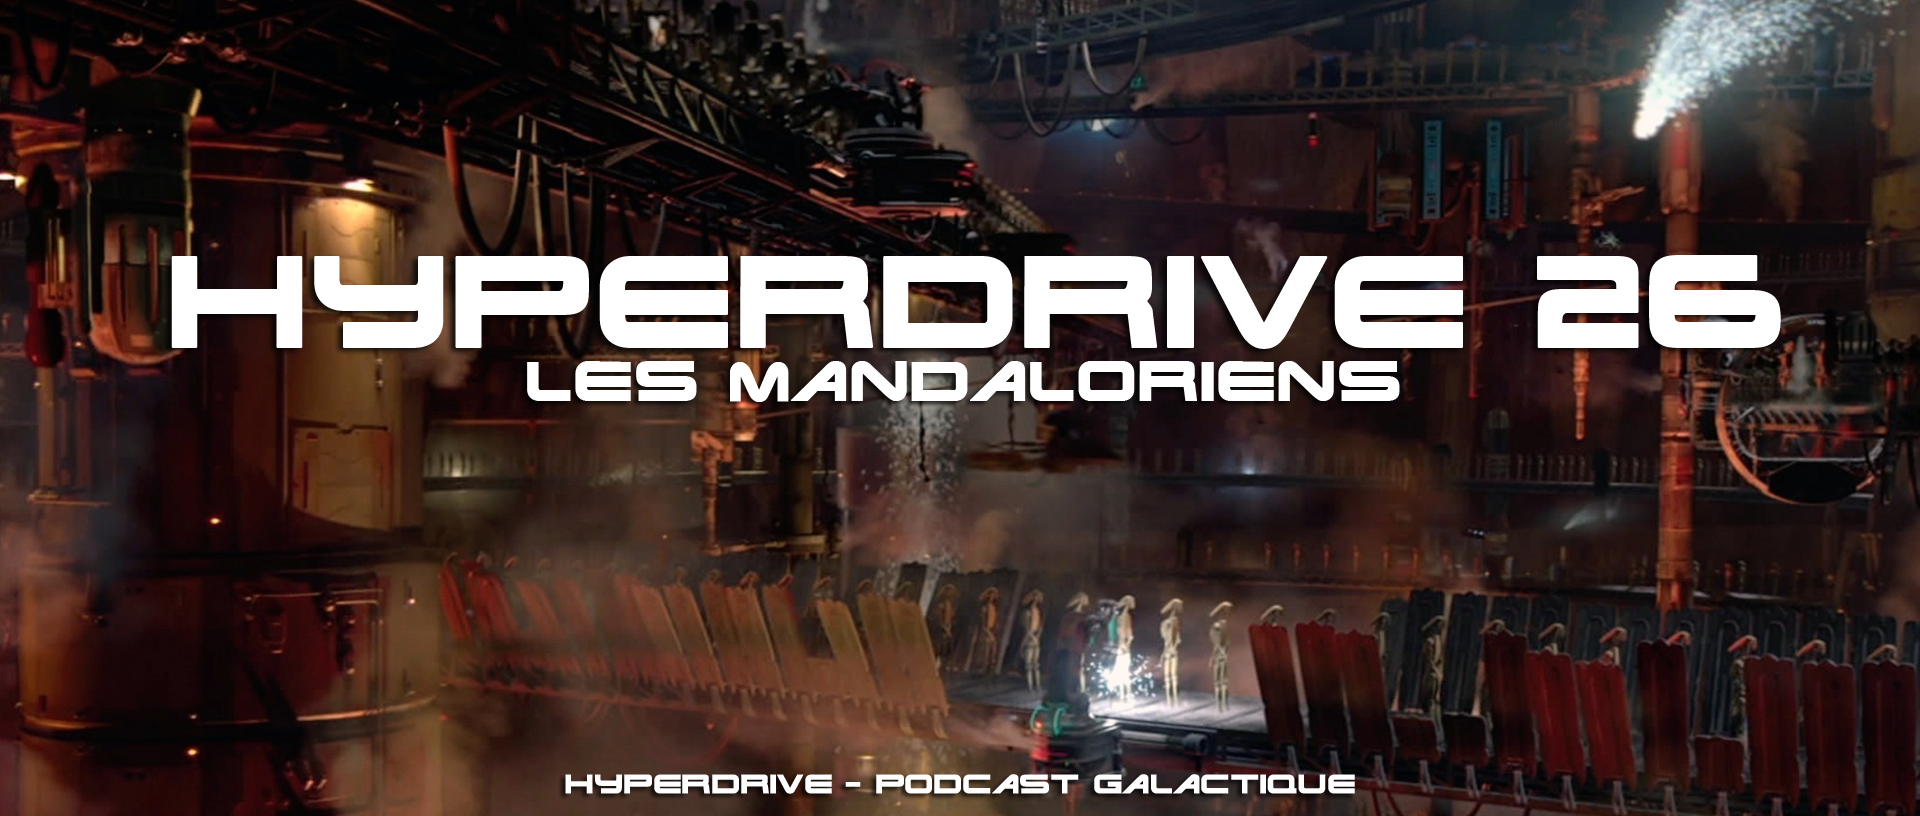 hyperdrive podcast mandaloriens